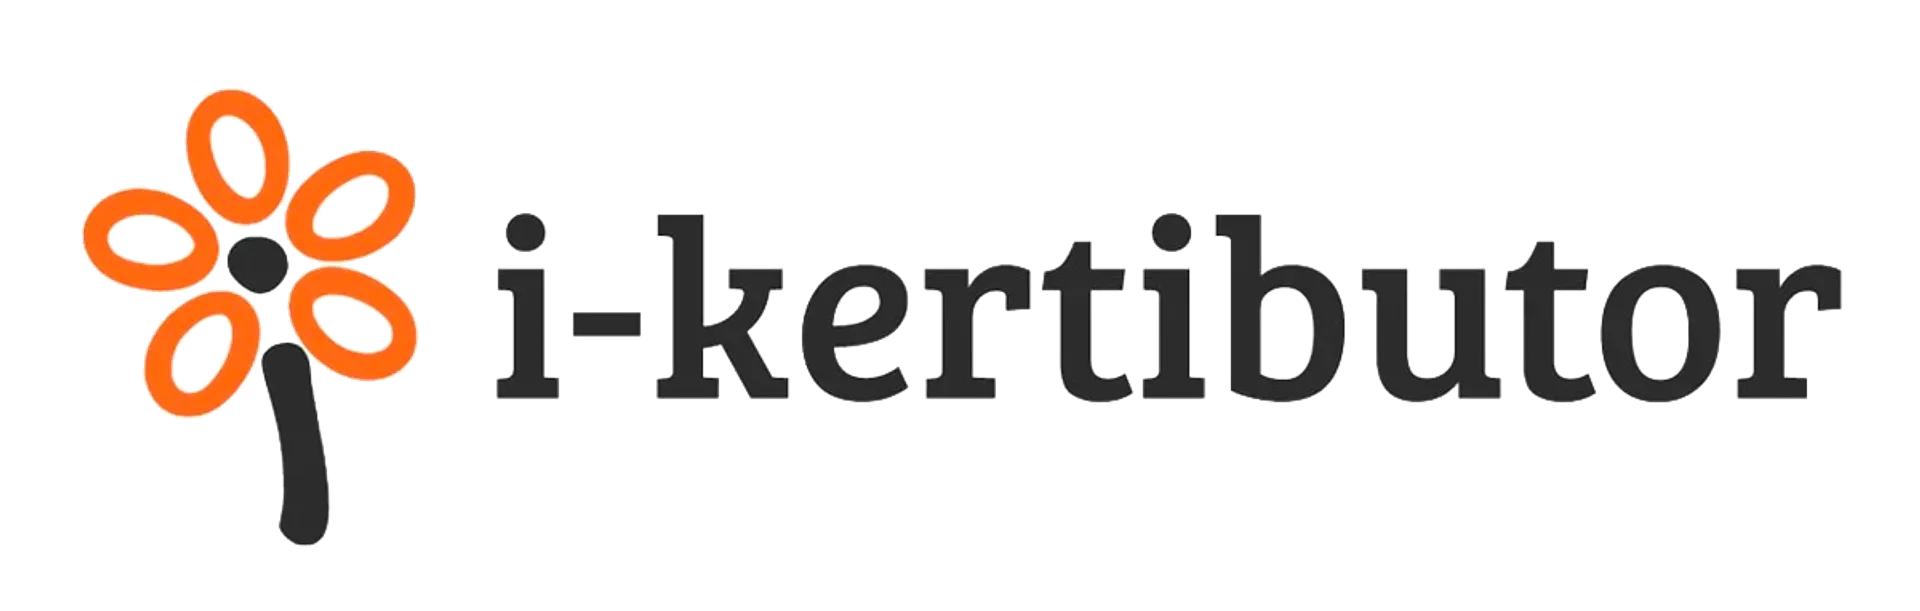 I-KERTIBUTOR logo